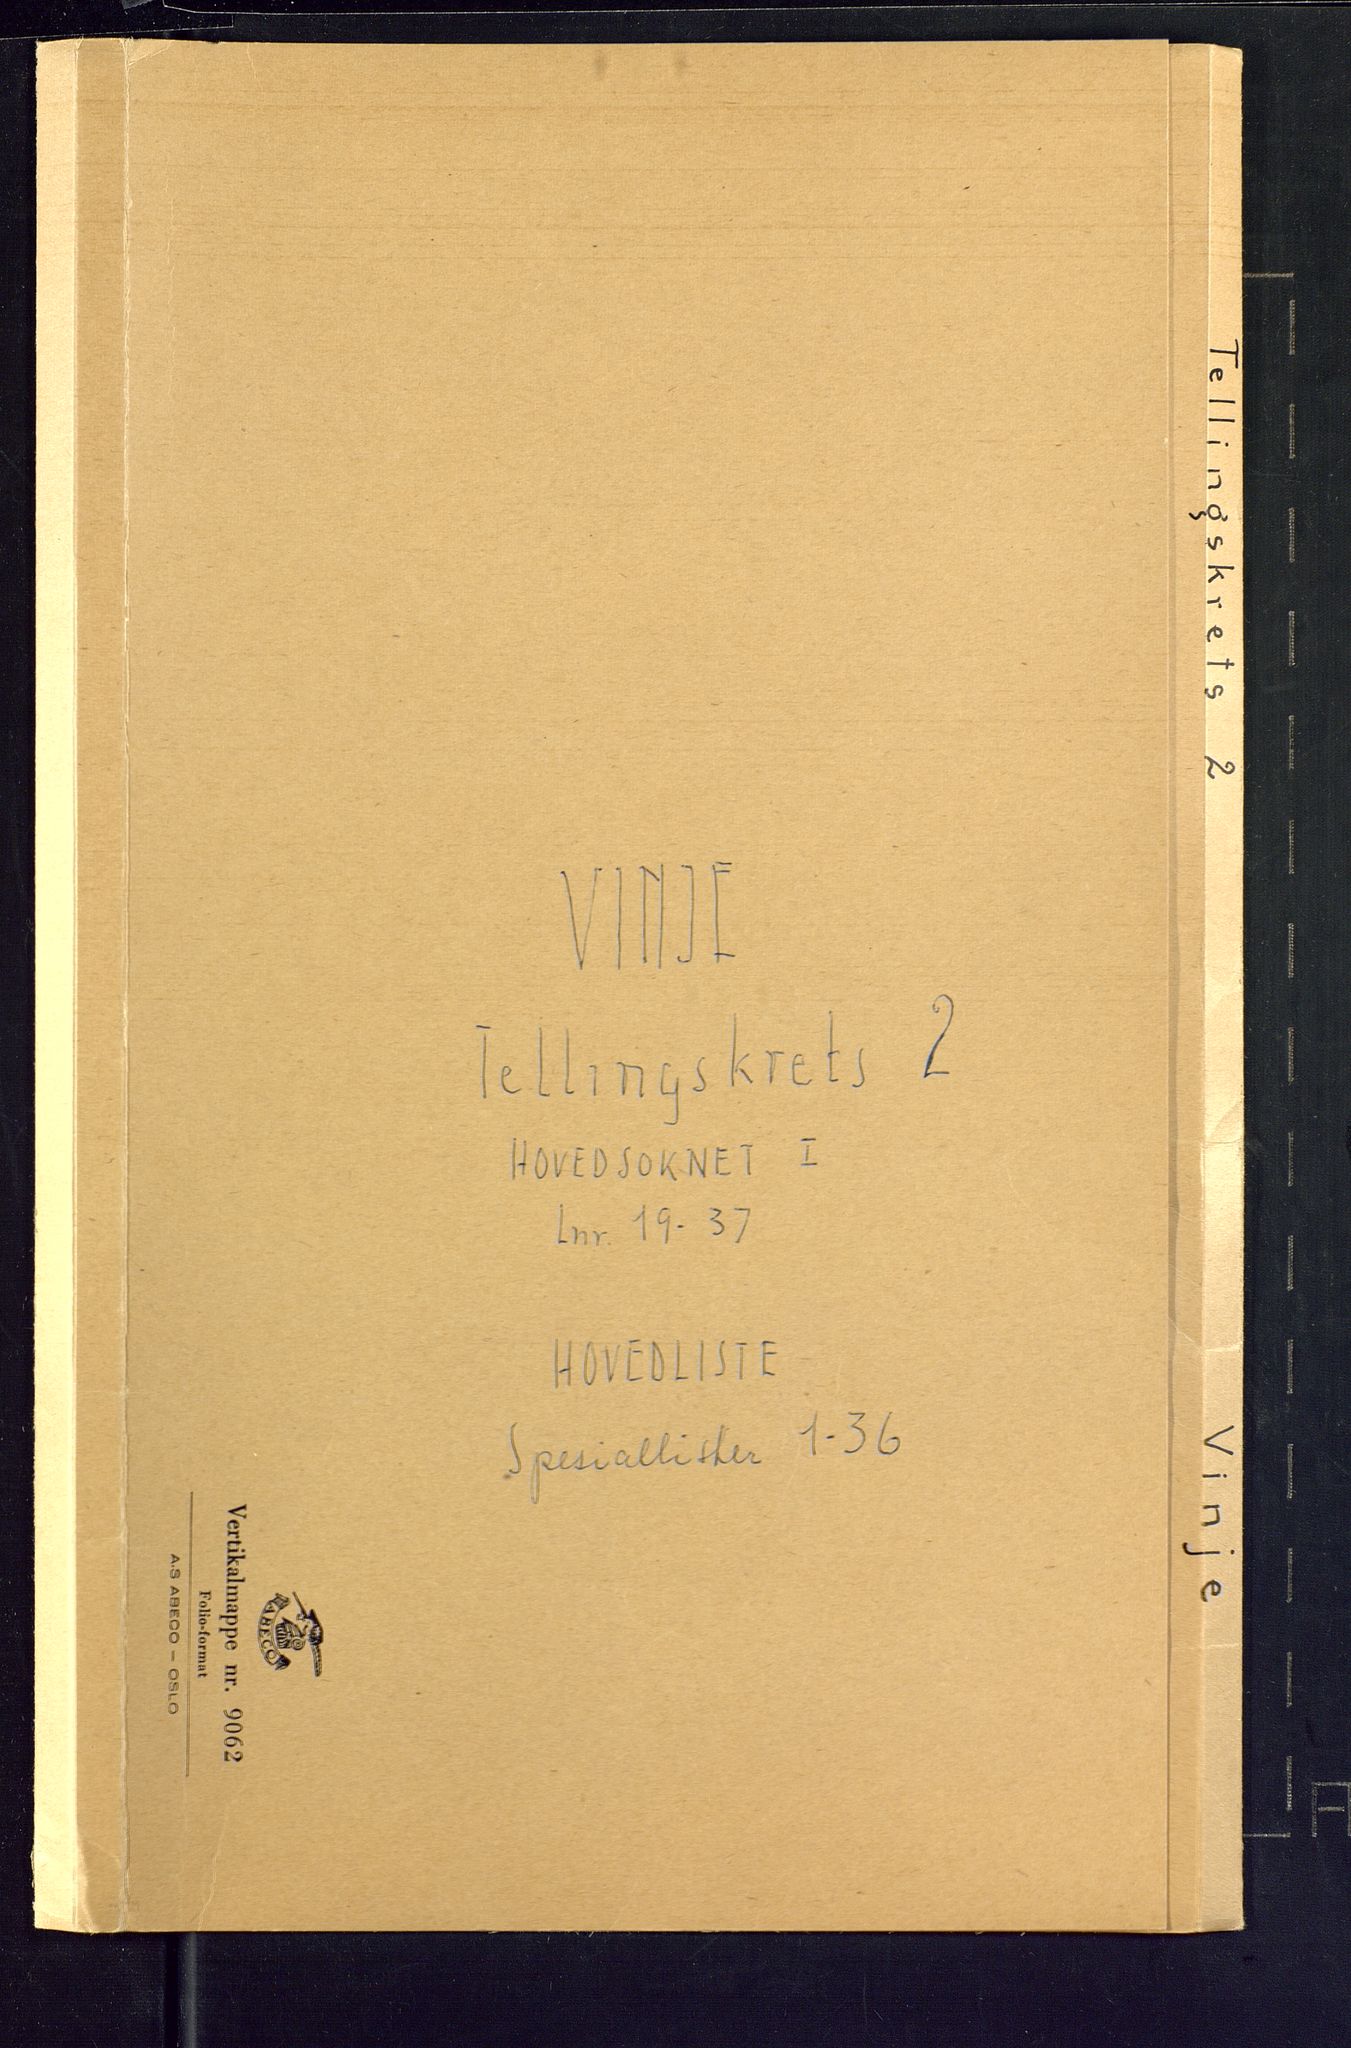 SAKO, Folketelling 1875 for 0834P Vinje prestegjeld, 1875, s. 5